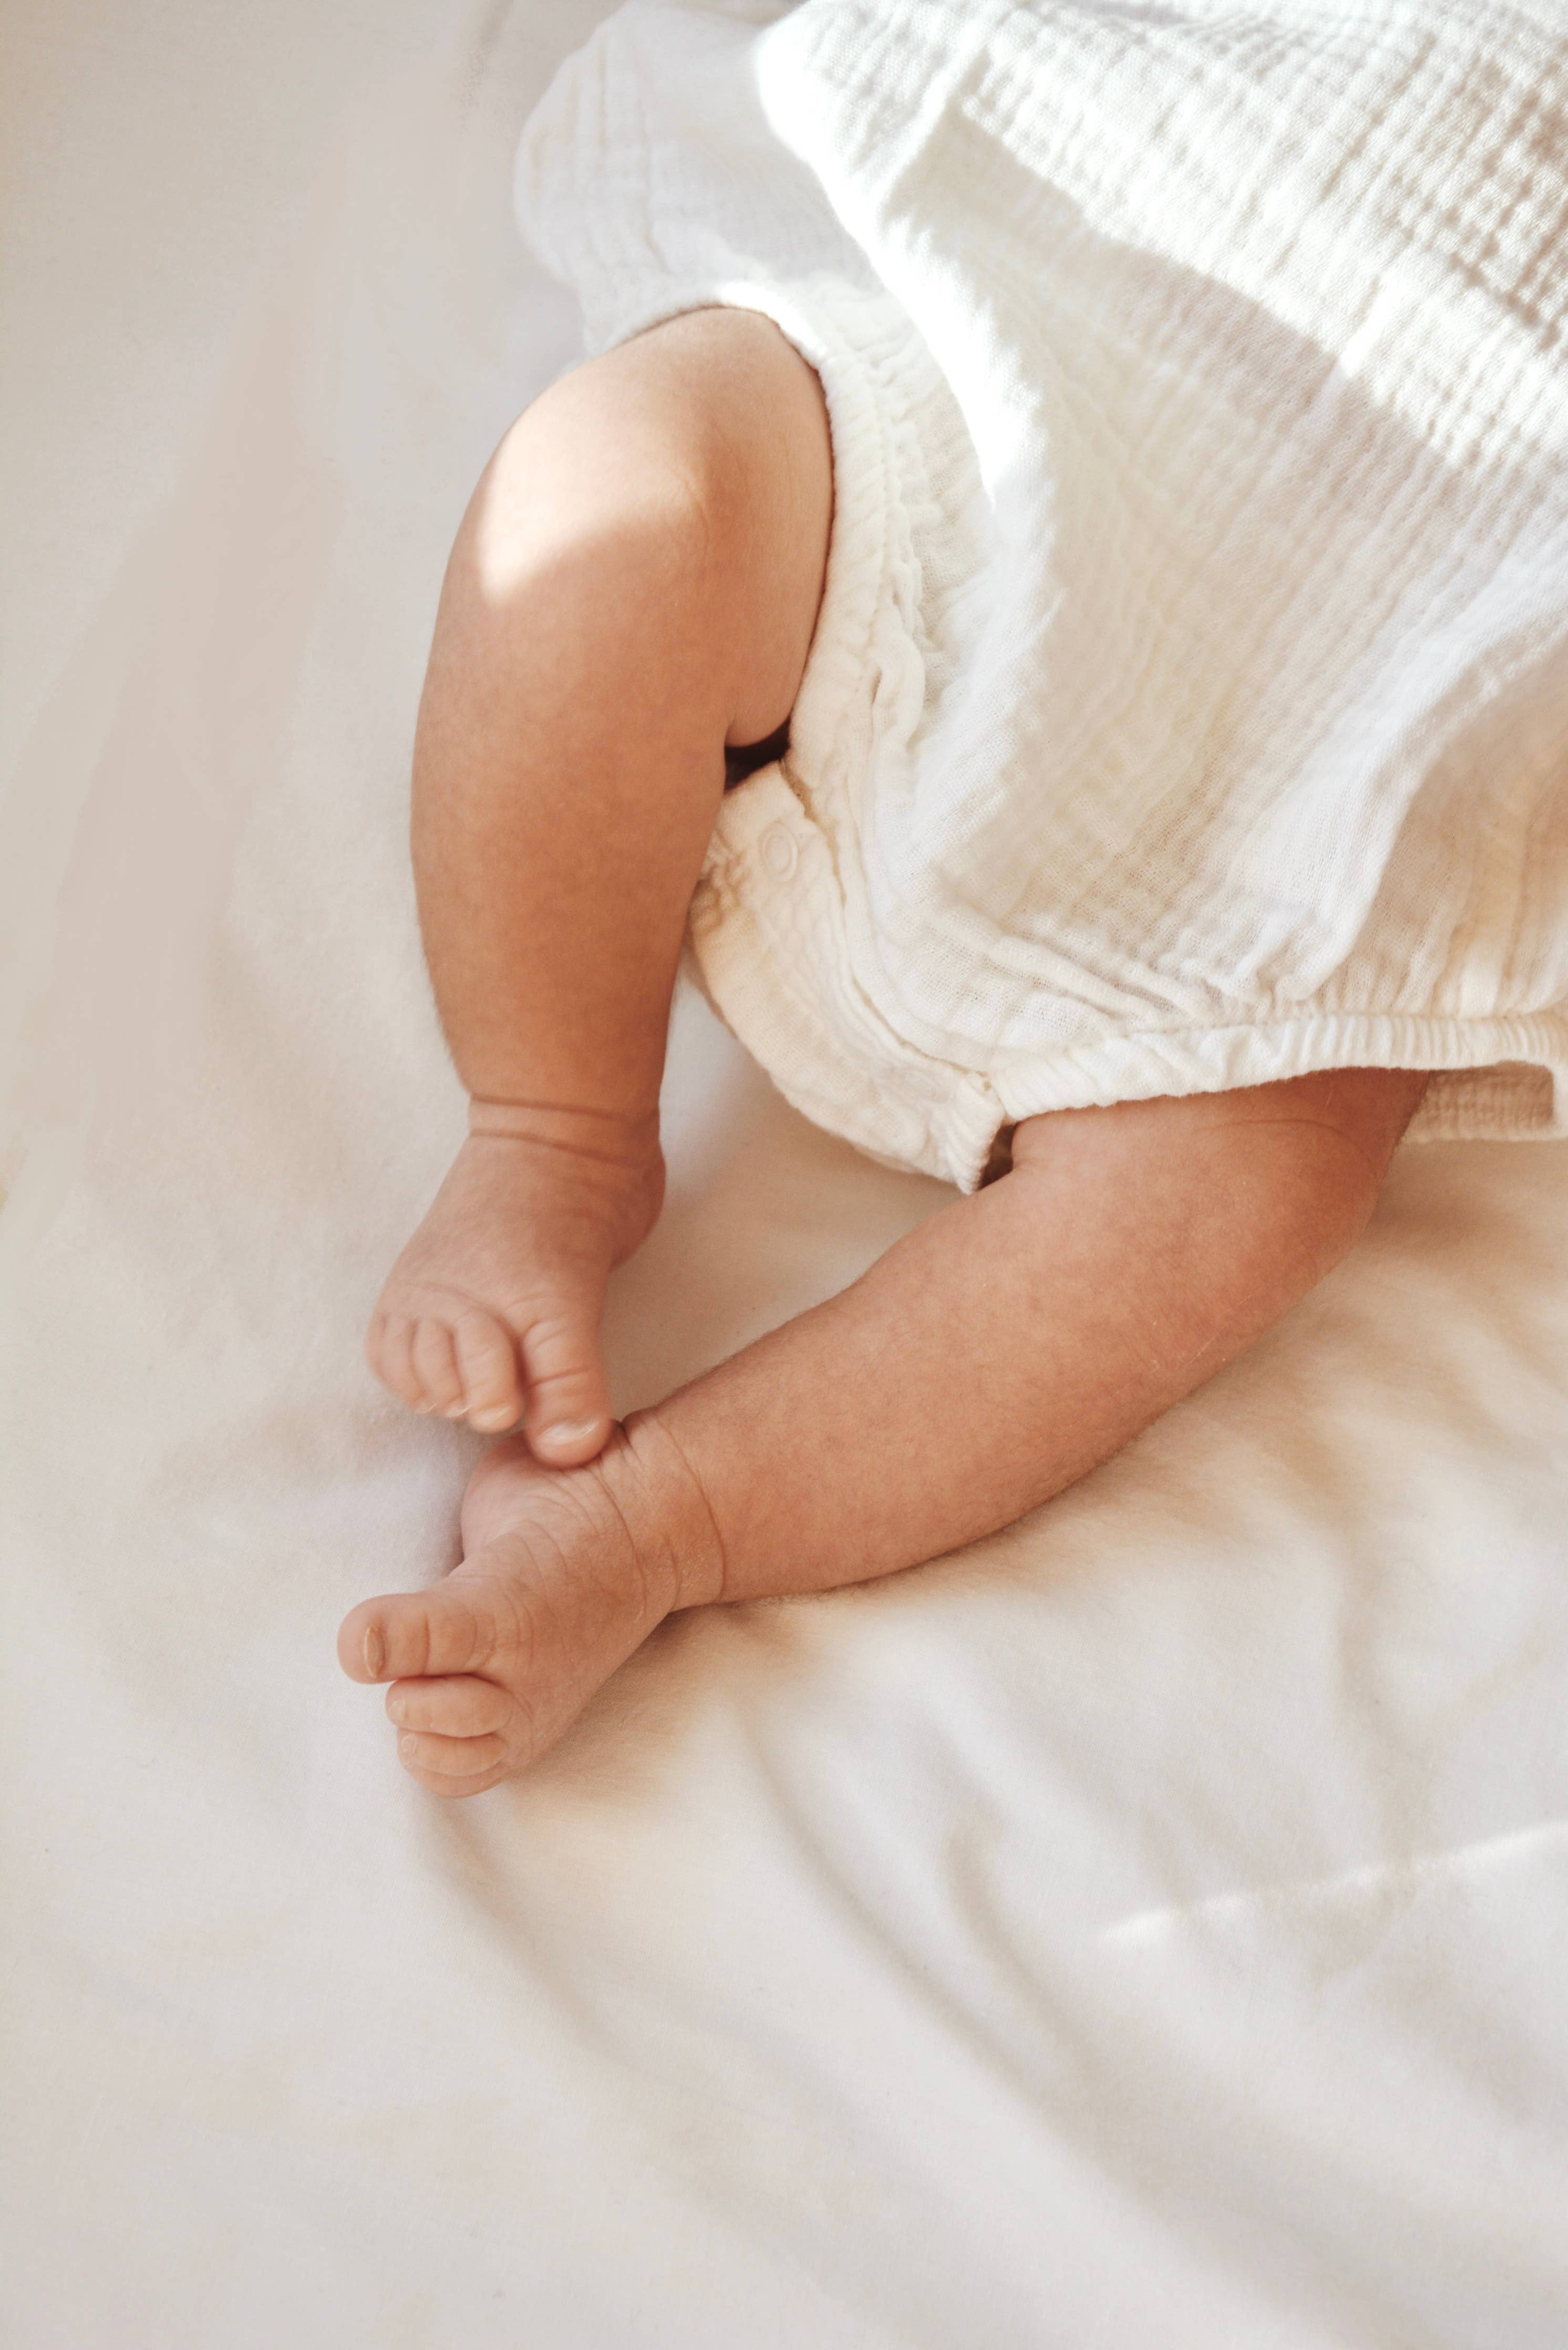 Baby summer overalls made of 100% cotton muslin - 18-24 months